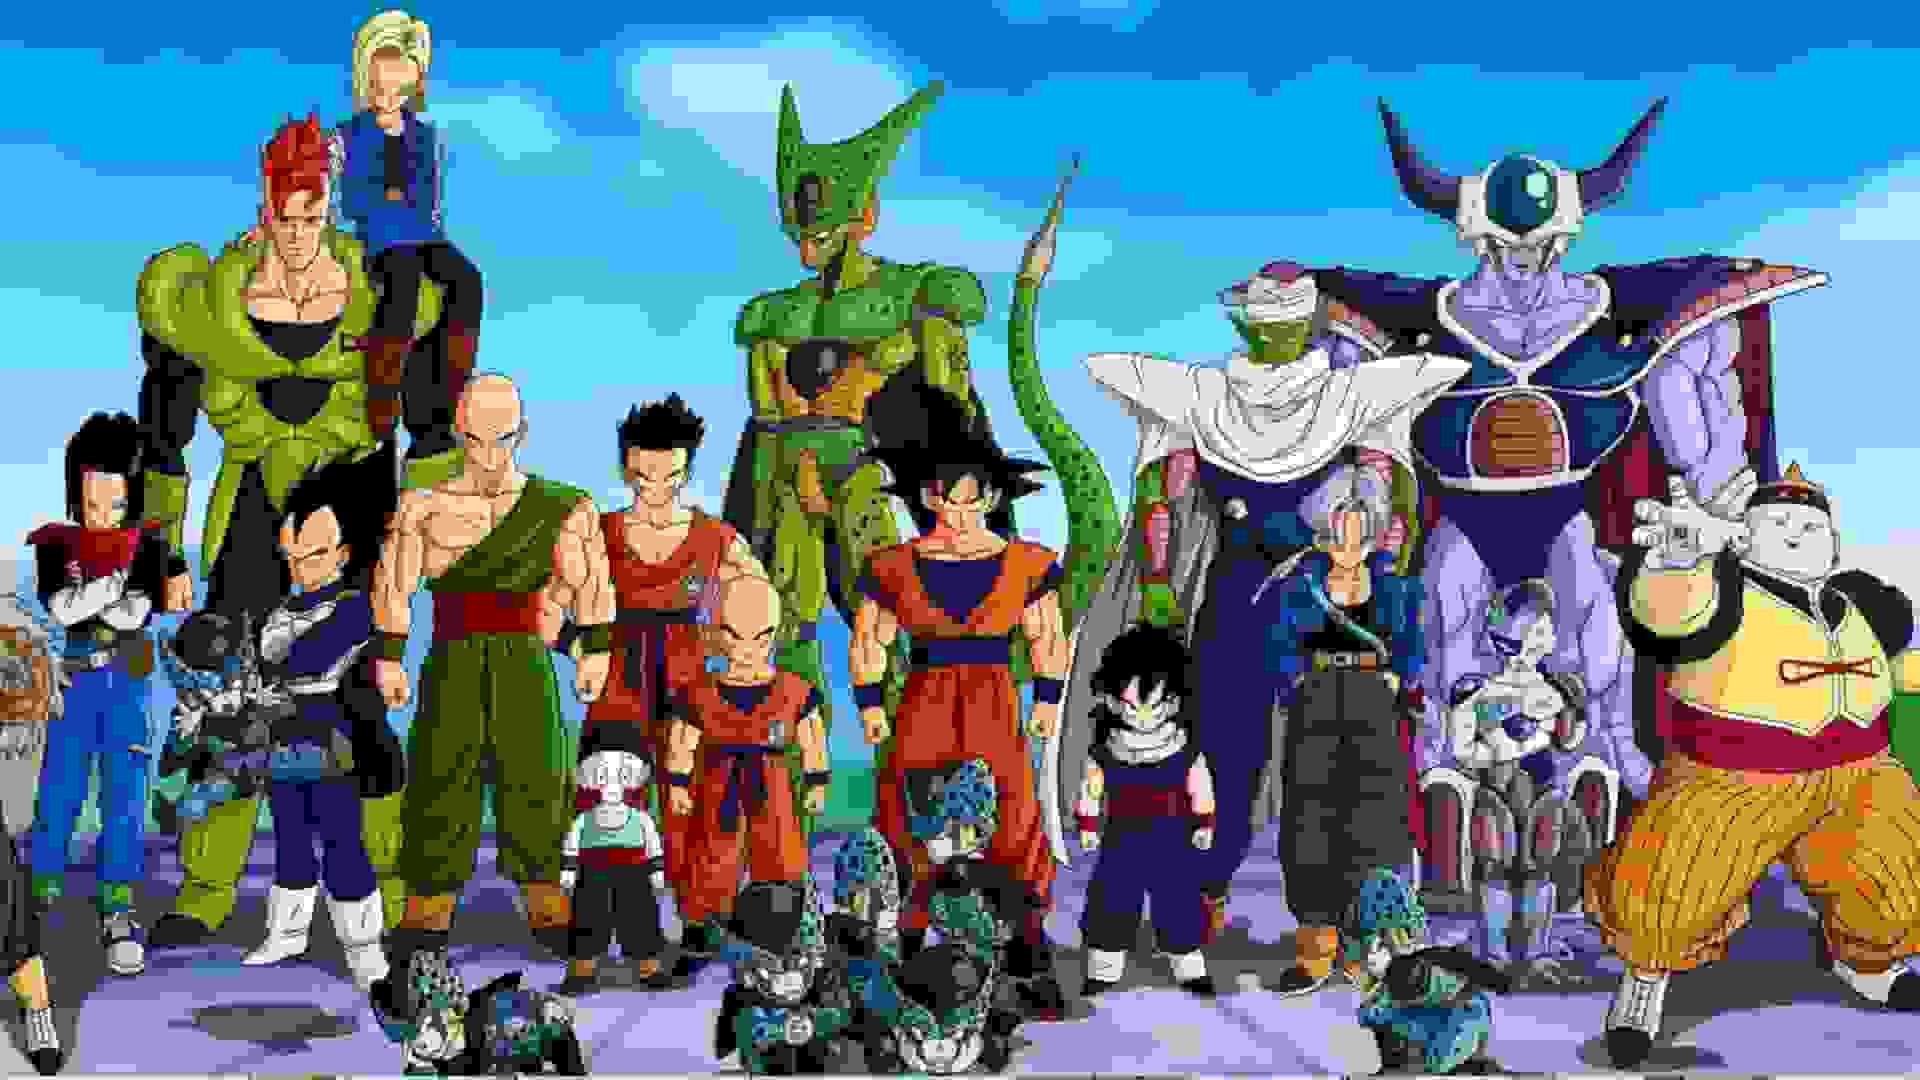 Dragon Ball Z background image